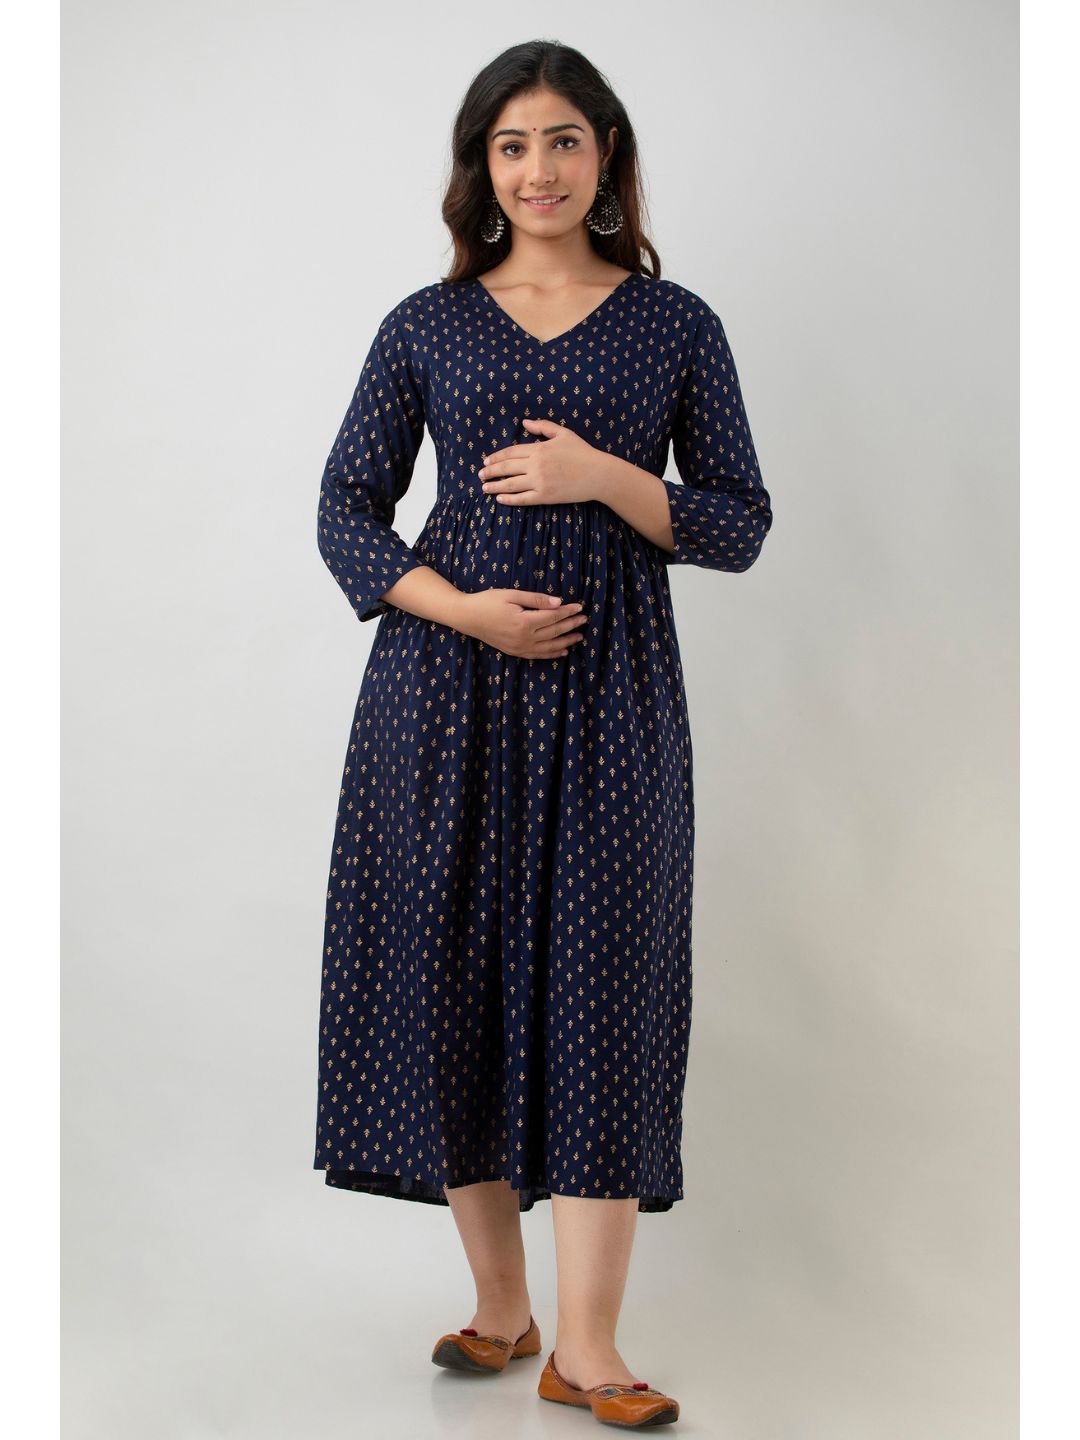 Maternity Dresses Collection | CIB Online Sri Lanka